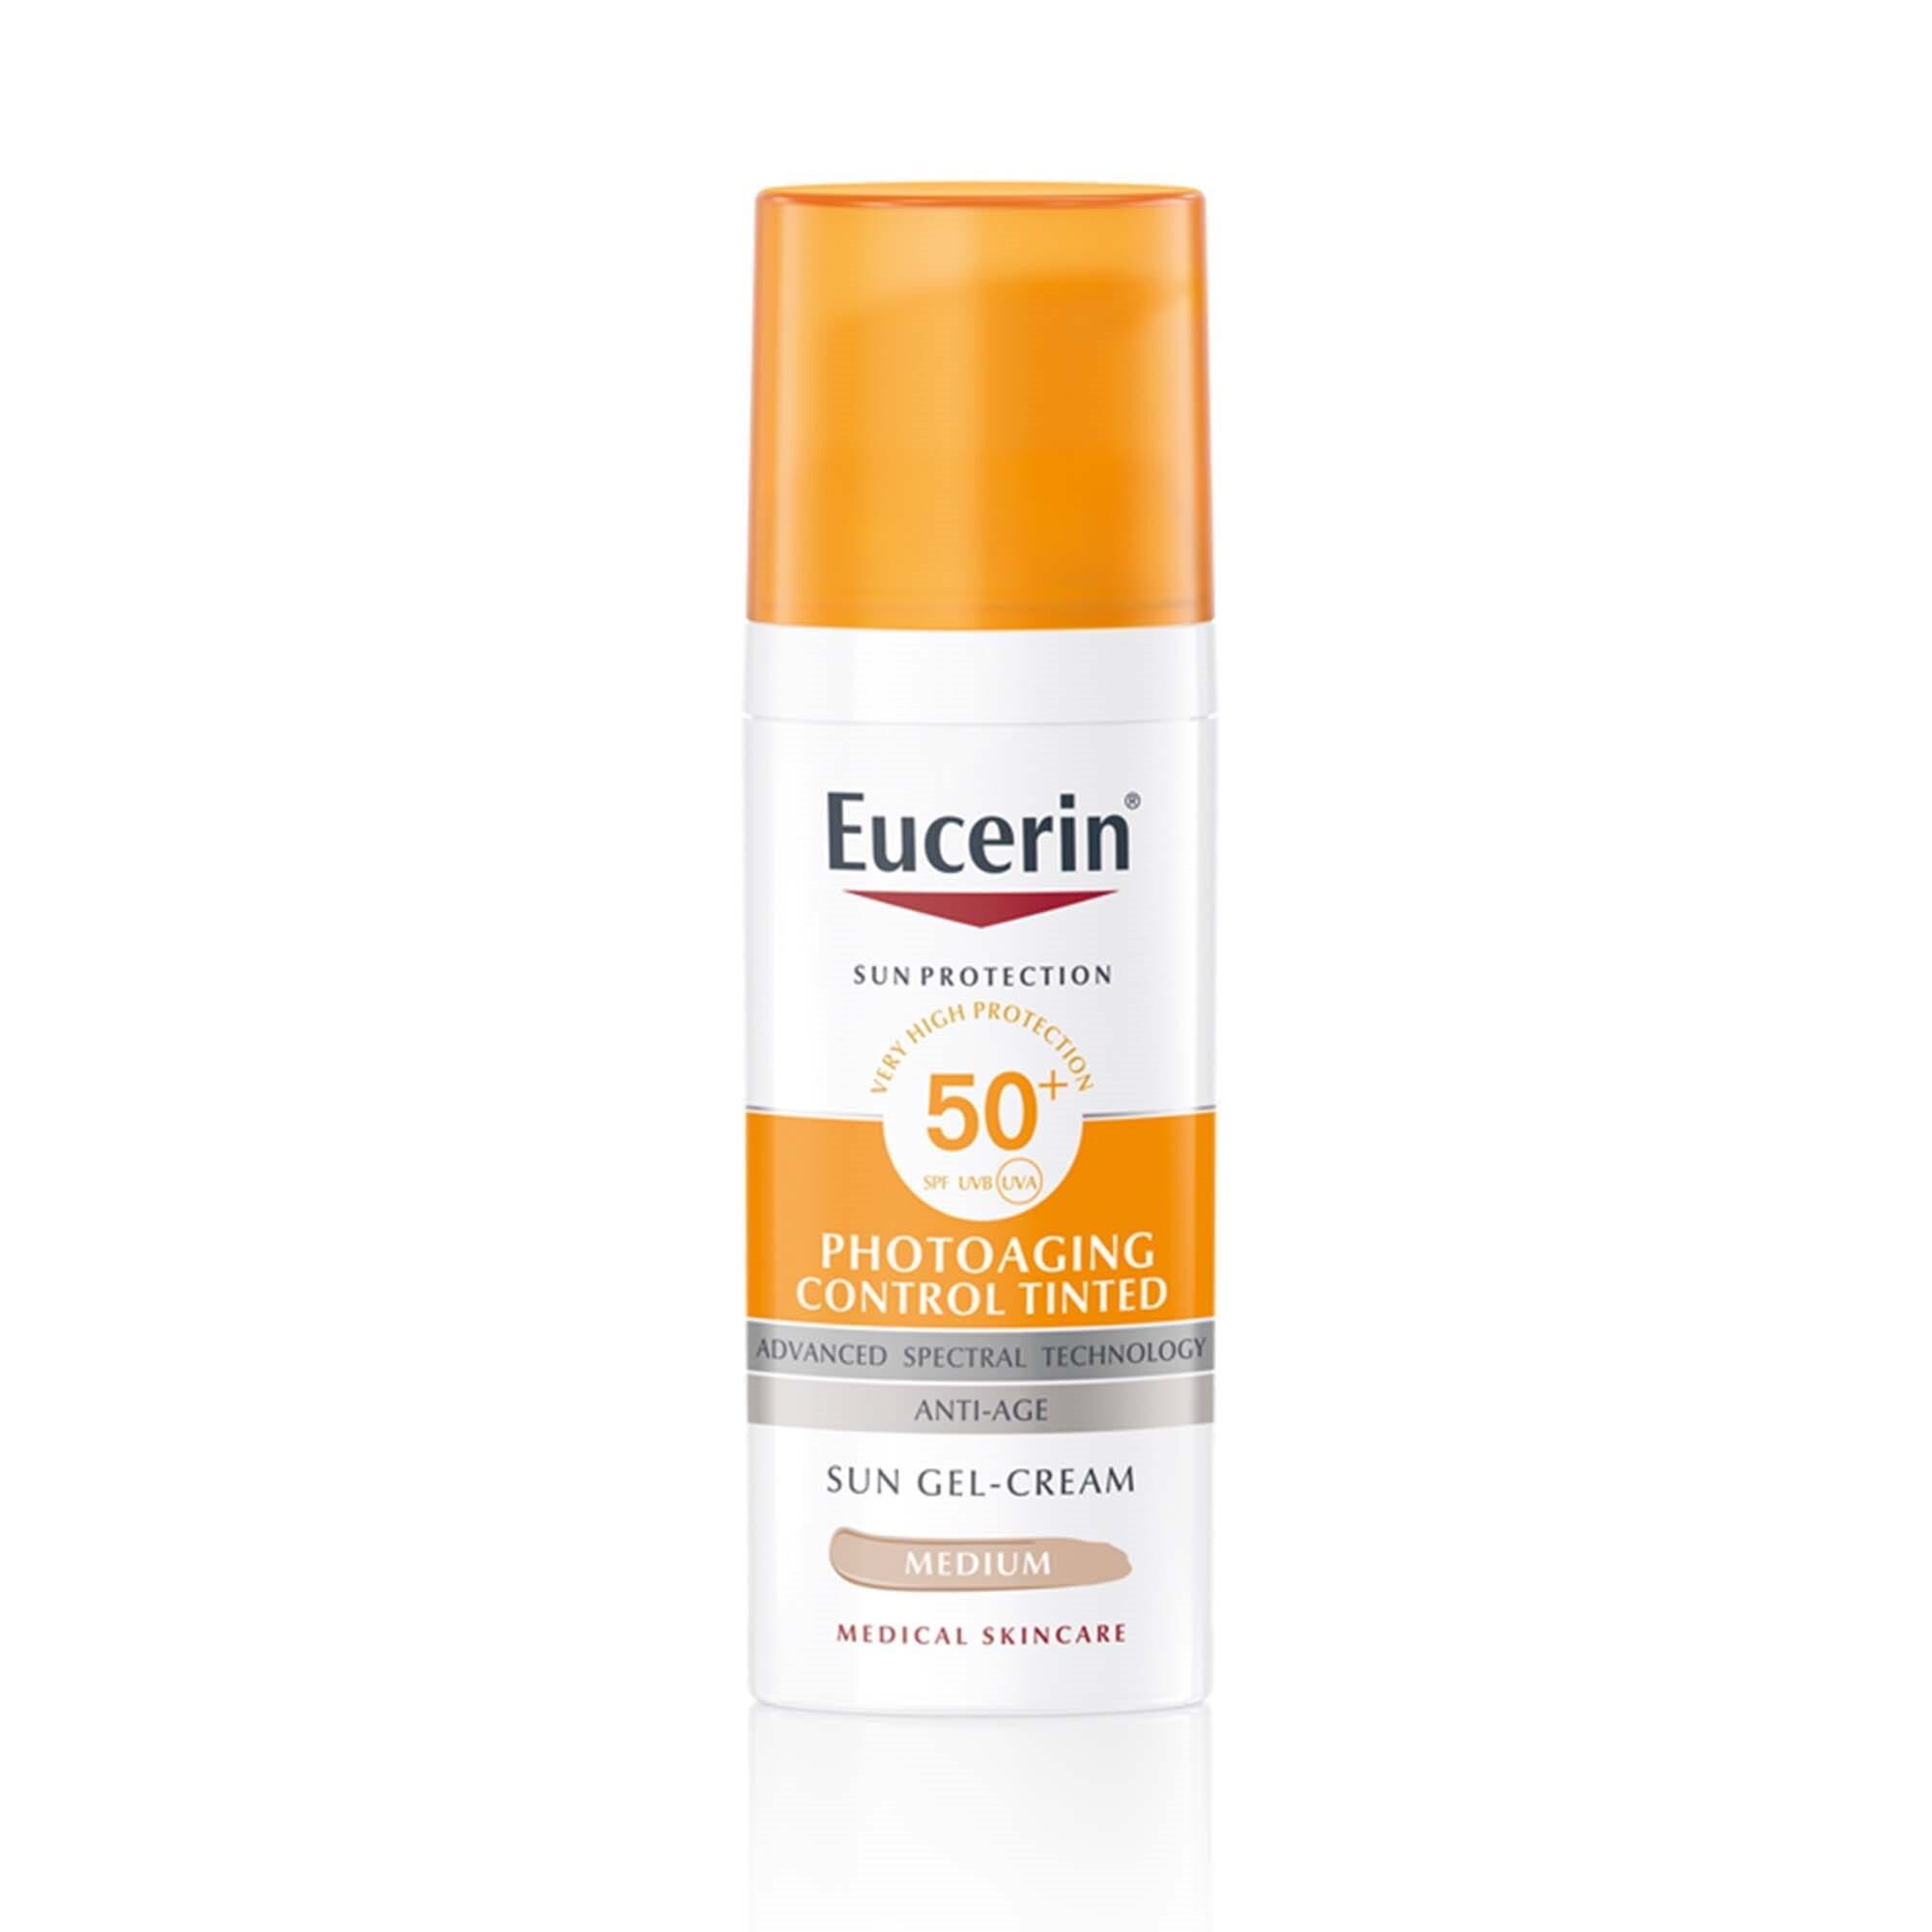 Eucerin Sun Protection Gel-crema con color Photoaging Control 50mL Medium SPF50+